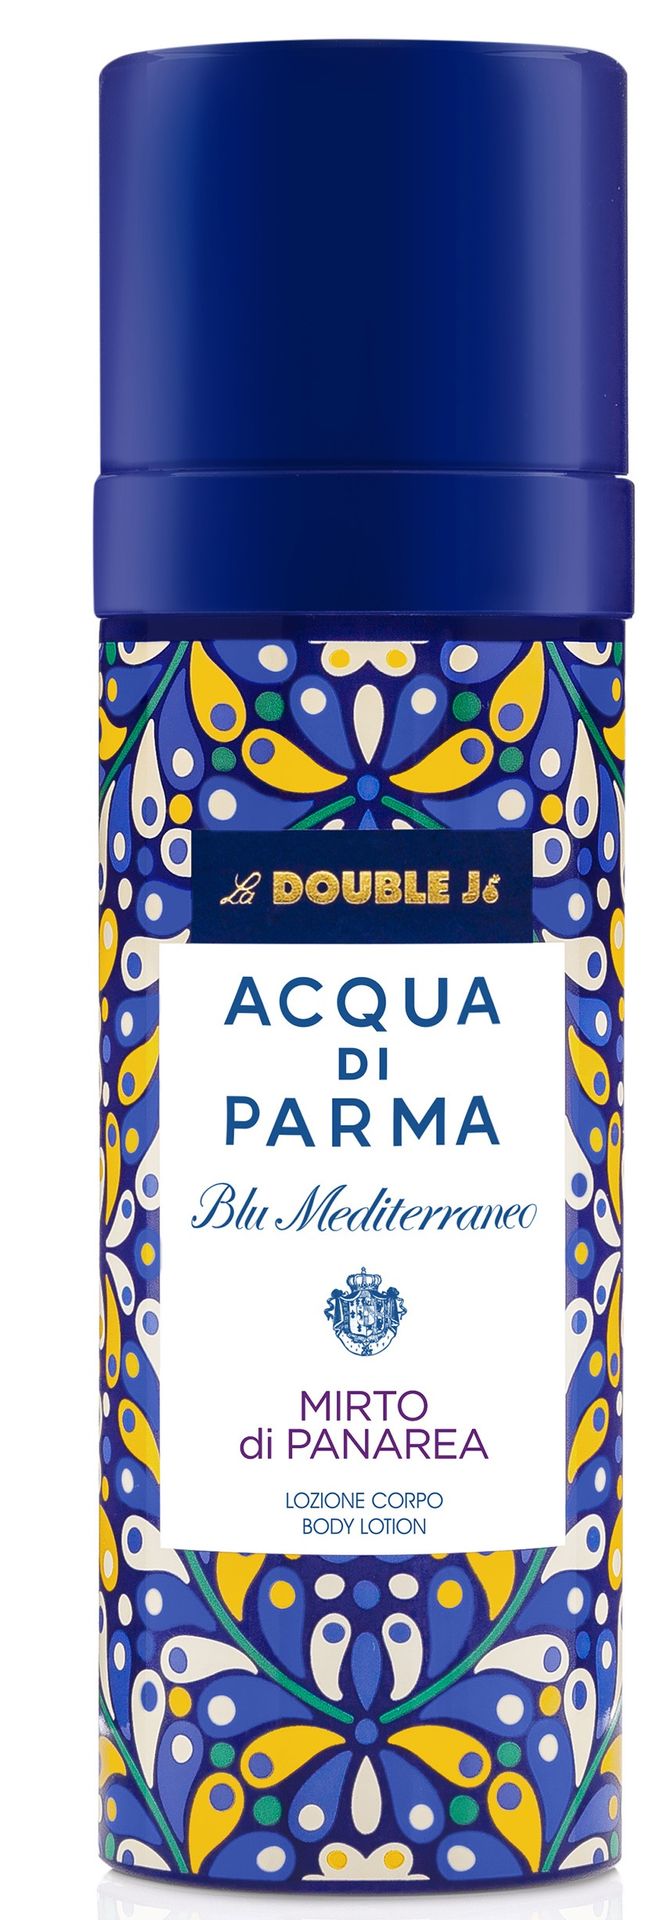 Acqua Di Parma Blu Mediterraneo Mirto di Panarea mleczko do ciała 150 ml unisex